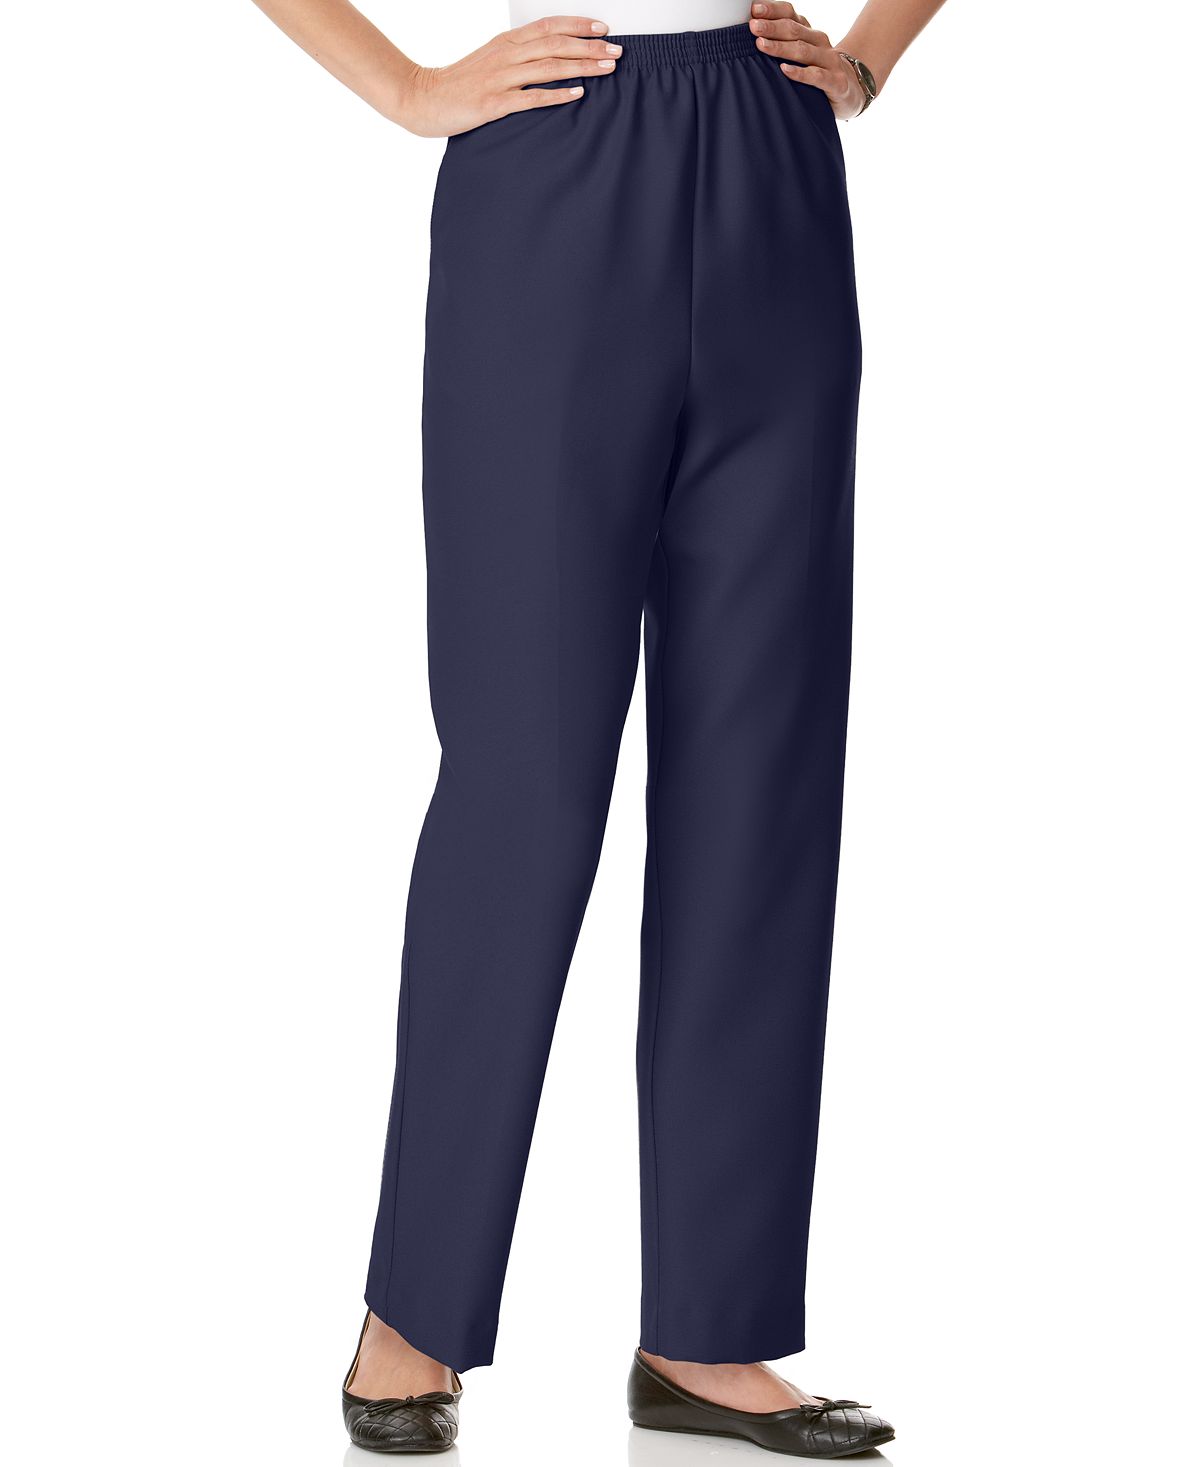 Классические прямые брюки без застежки в цвете Petite и Petite Short Alfred Dunner, темно-синий